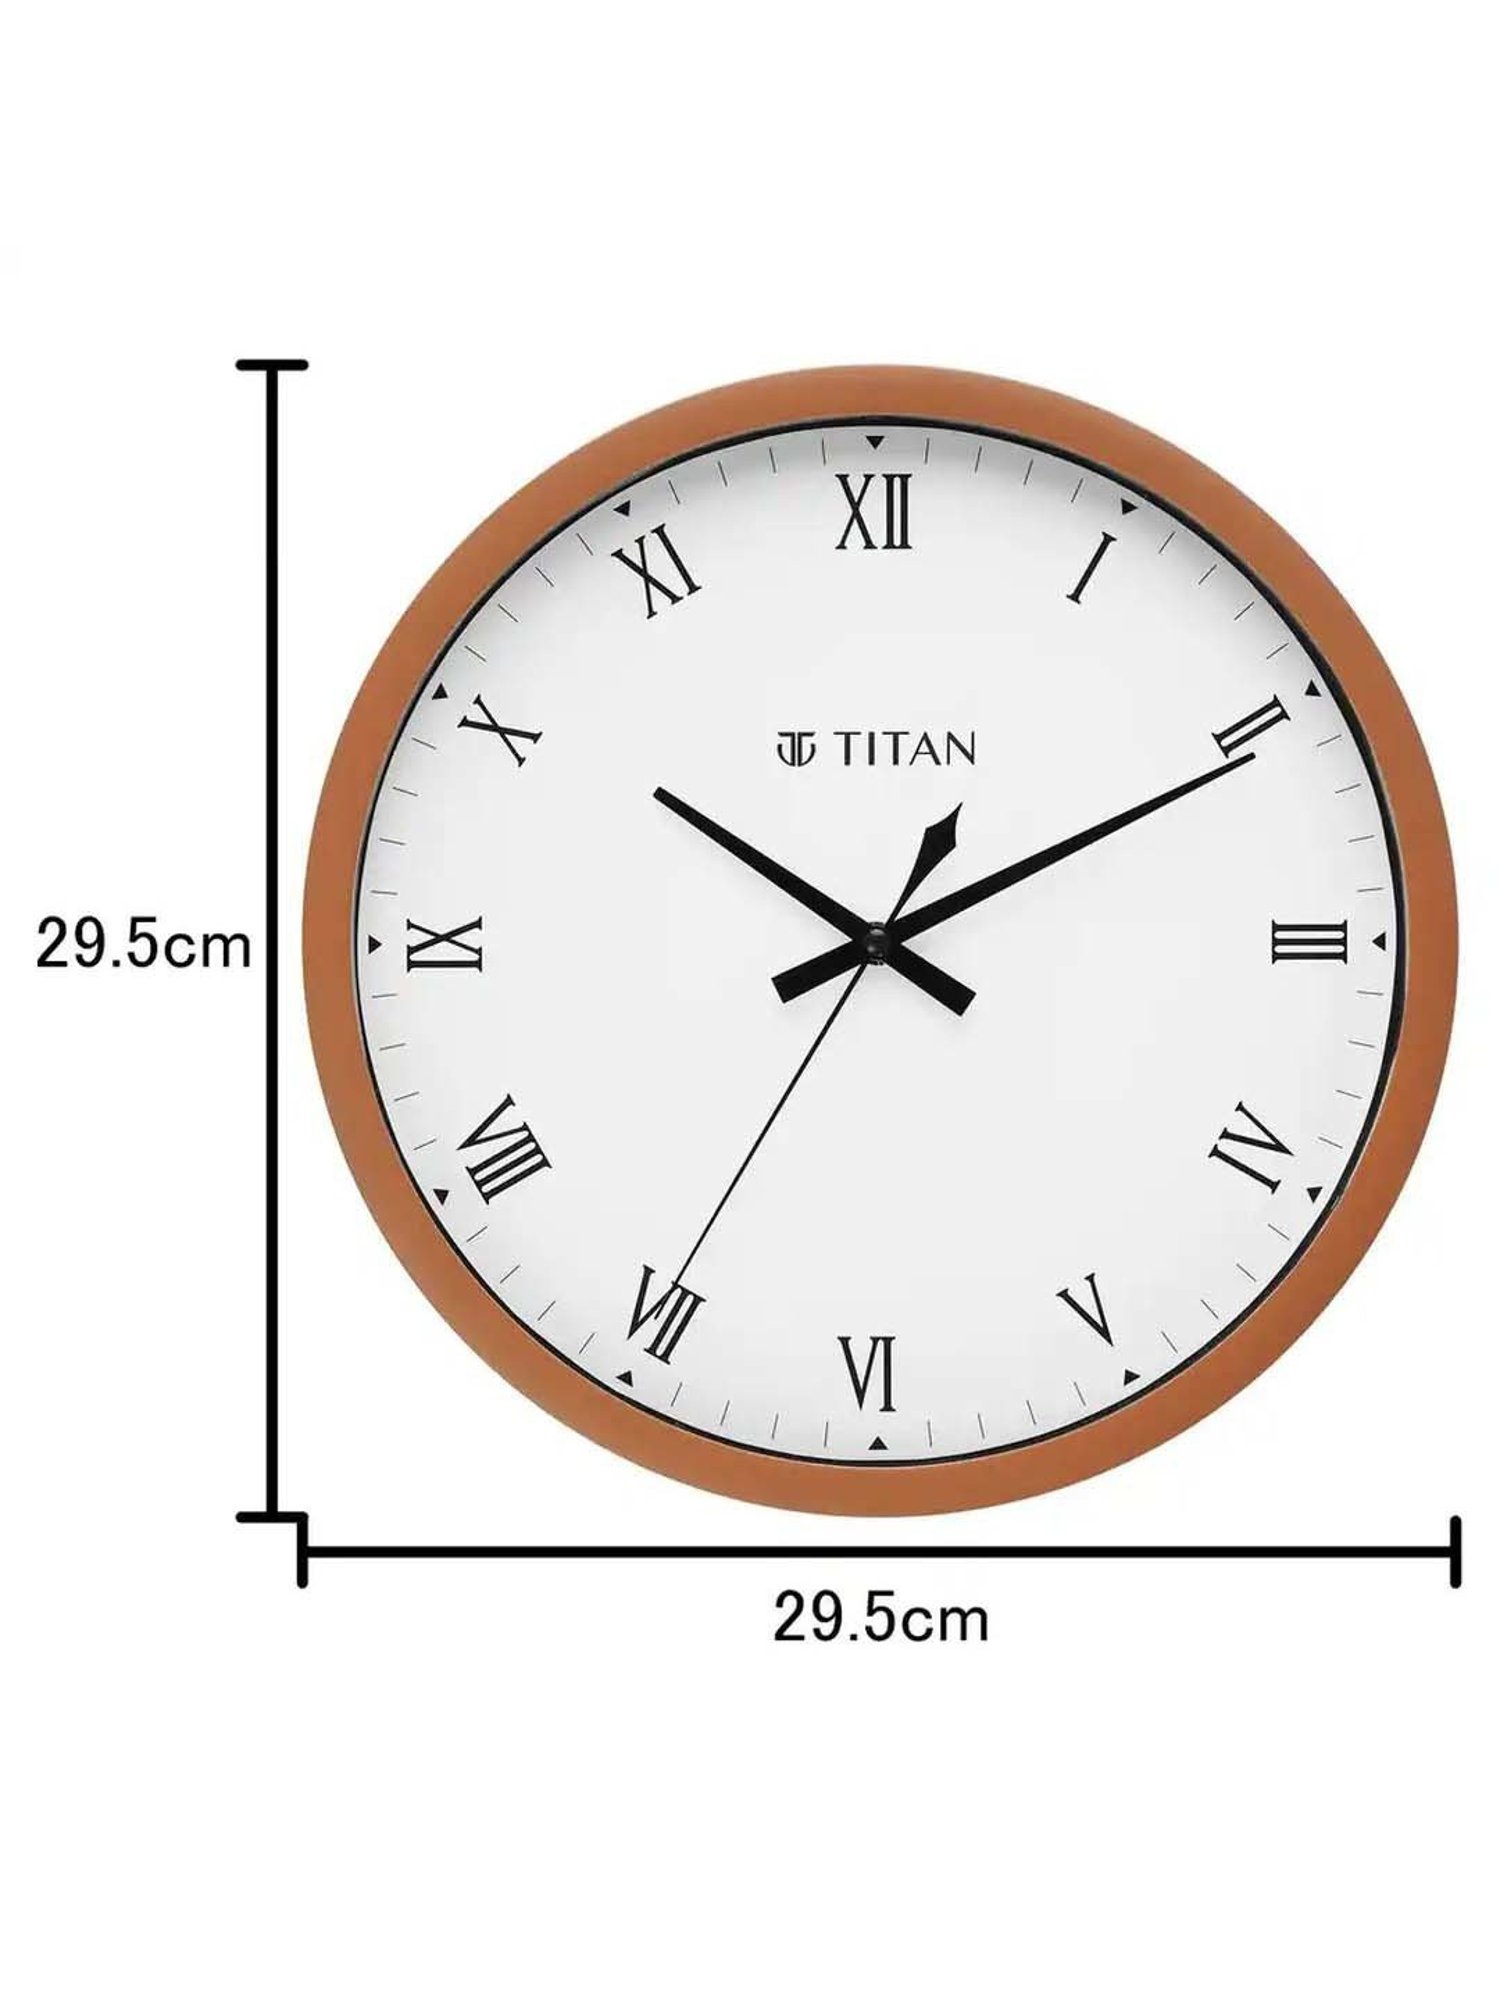 Titan Analog Wall Clock : Unboxing | 30.5 cm X 30.5 cm... Should you  buy...??? #WallClock #Titan - YouTube